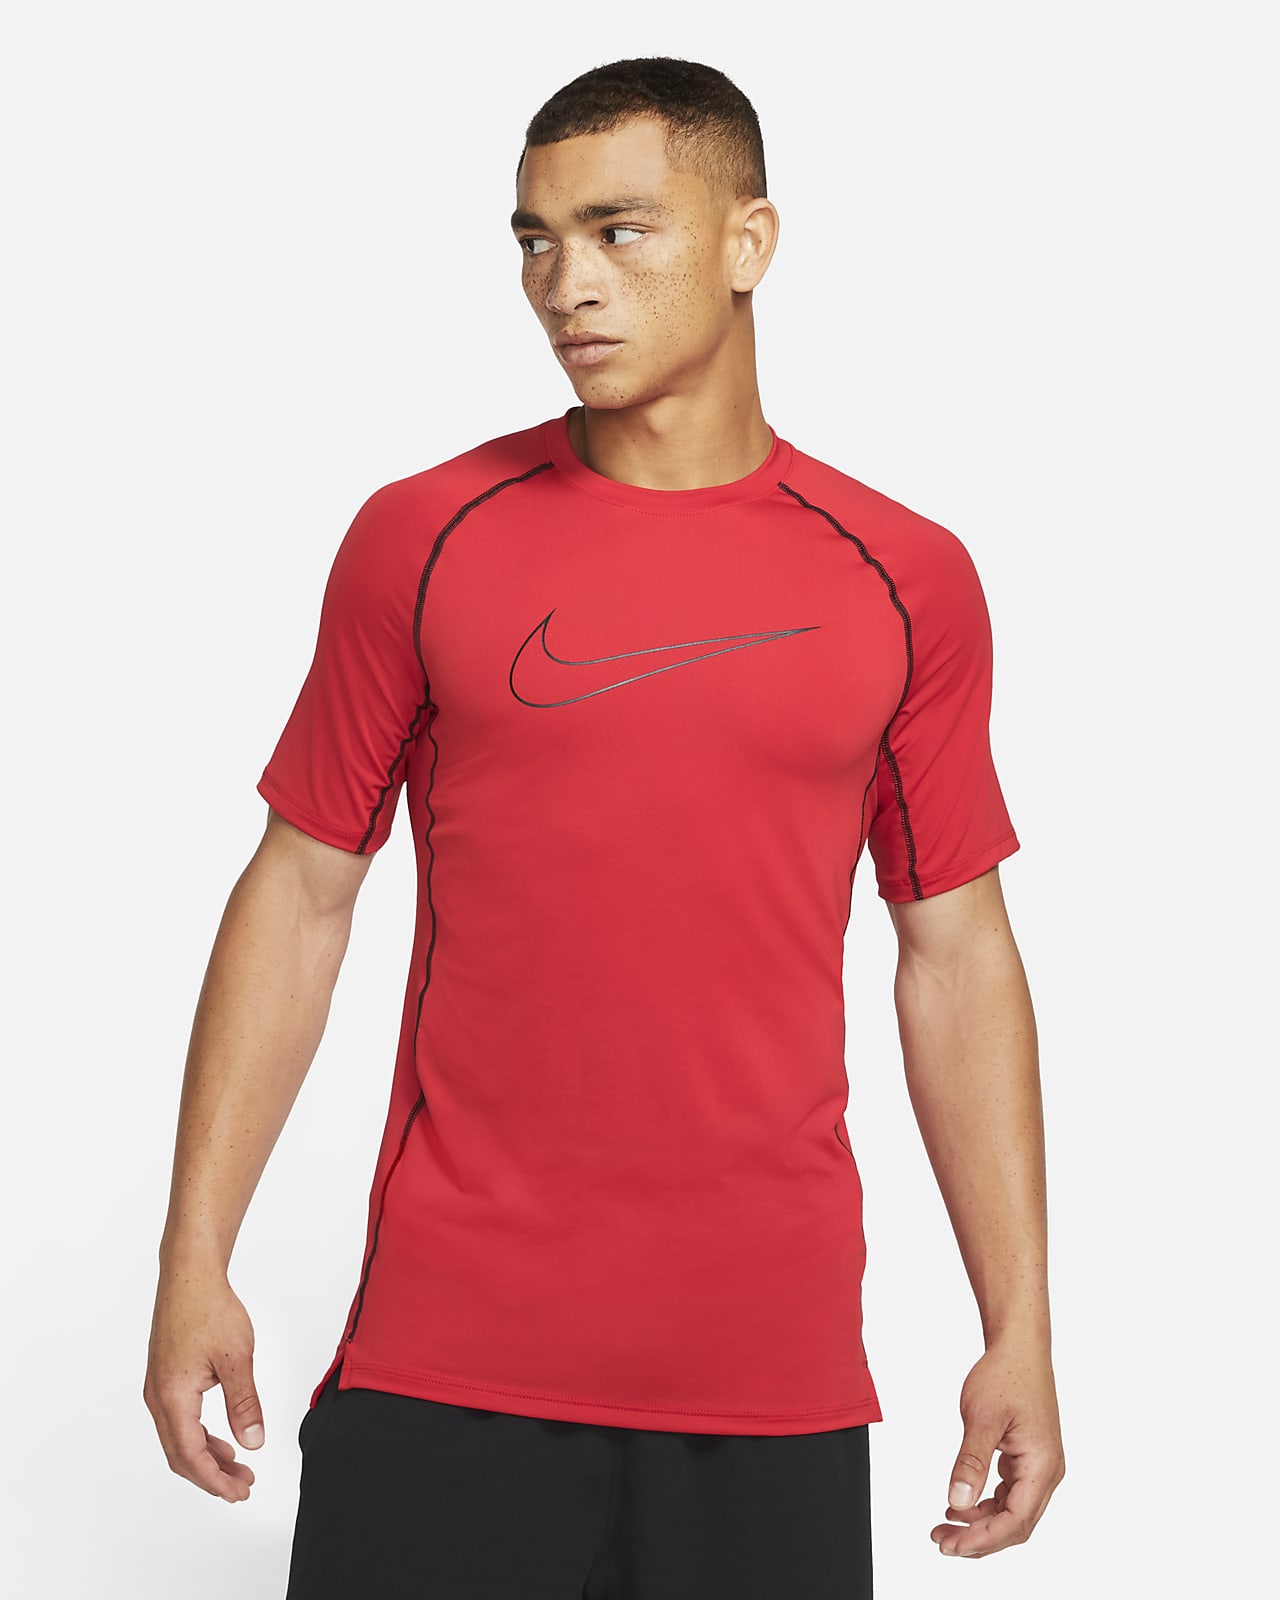 Clap Evacuation Sui Nike Pro Dri-FIT Men's Slim Fit Short-Sleeve Top. Nike.com